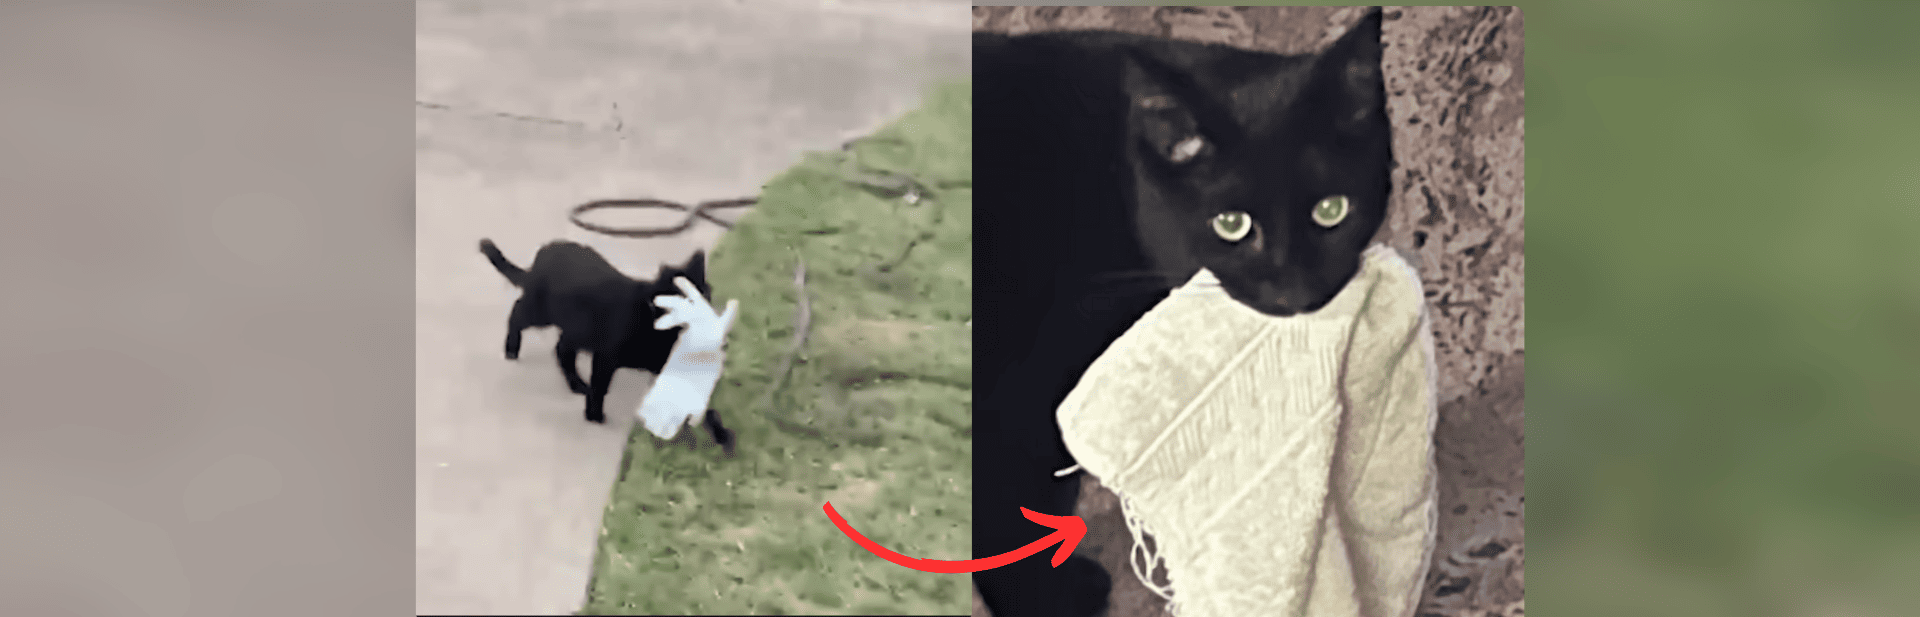 Clever Cat Burglar Turns Neighborhood Into Personal Treasure Trove, Stealing Hearts and Socks Alike